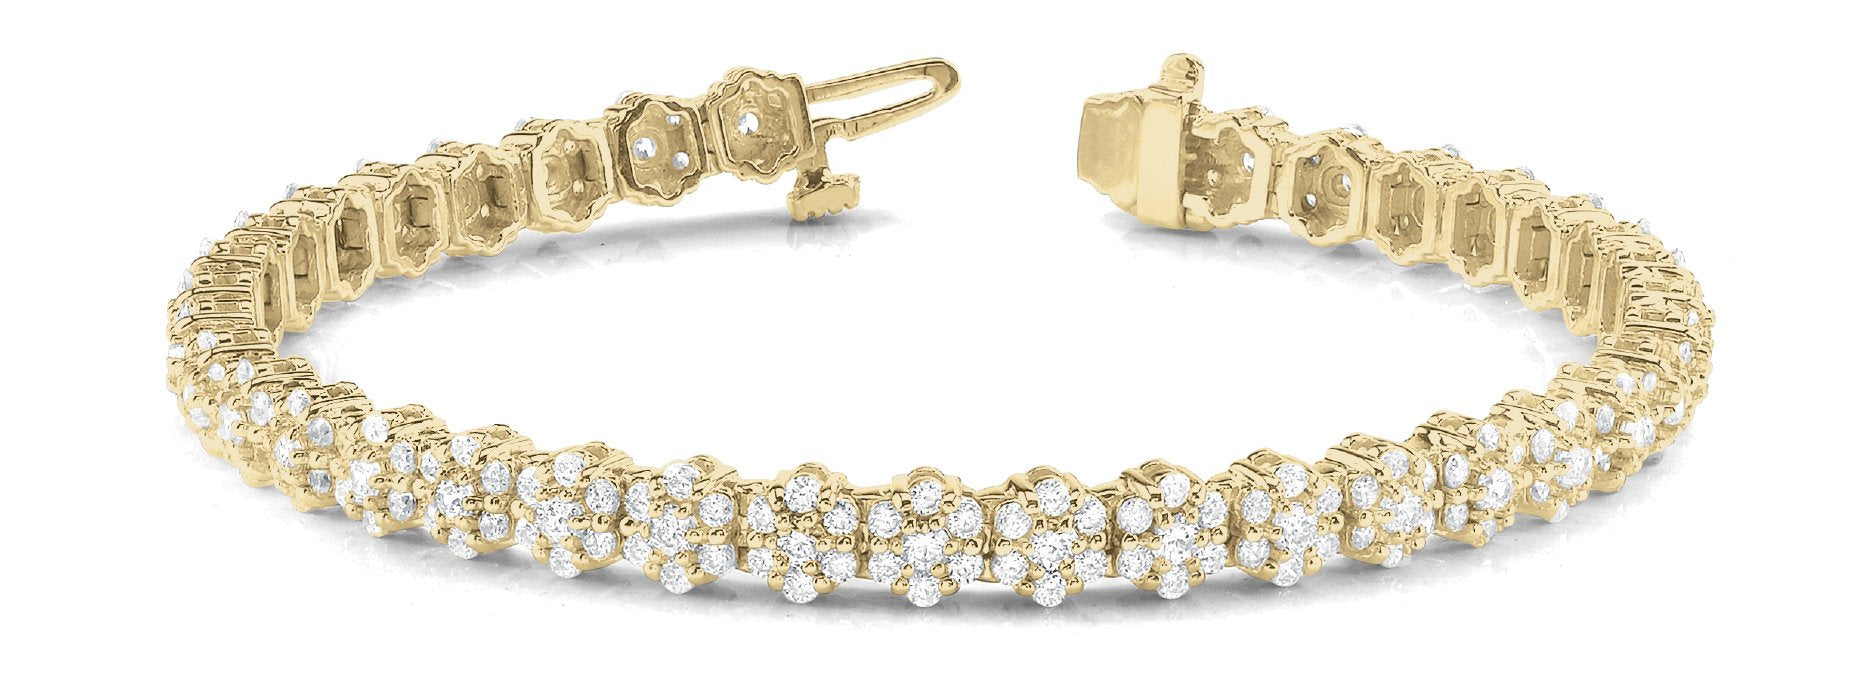 Fancy Diamond Bracelet Ladies 4.39ct tw - 14kt Yellow Gold